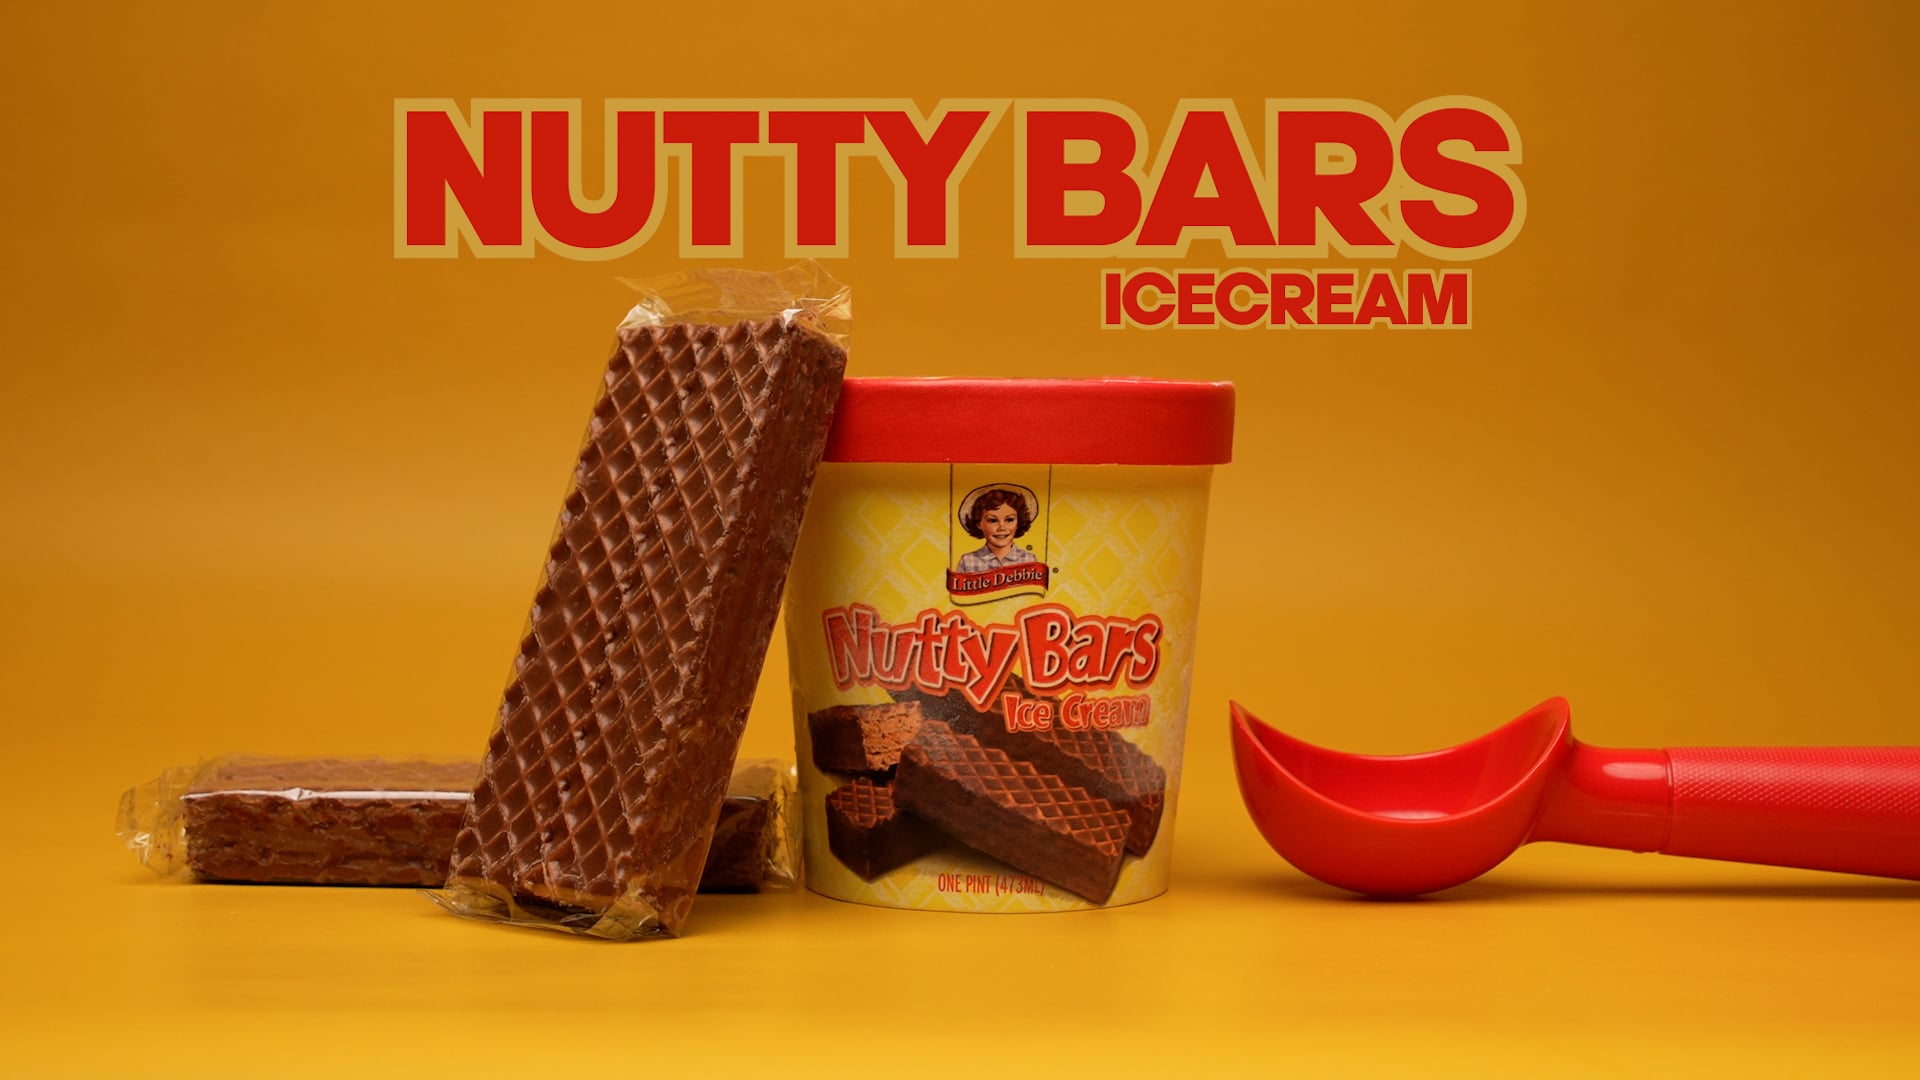 Nutty Bars Ice cream ad